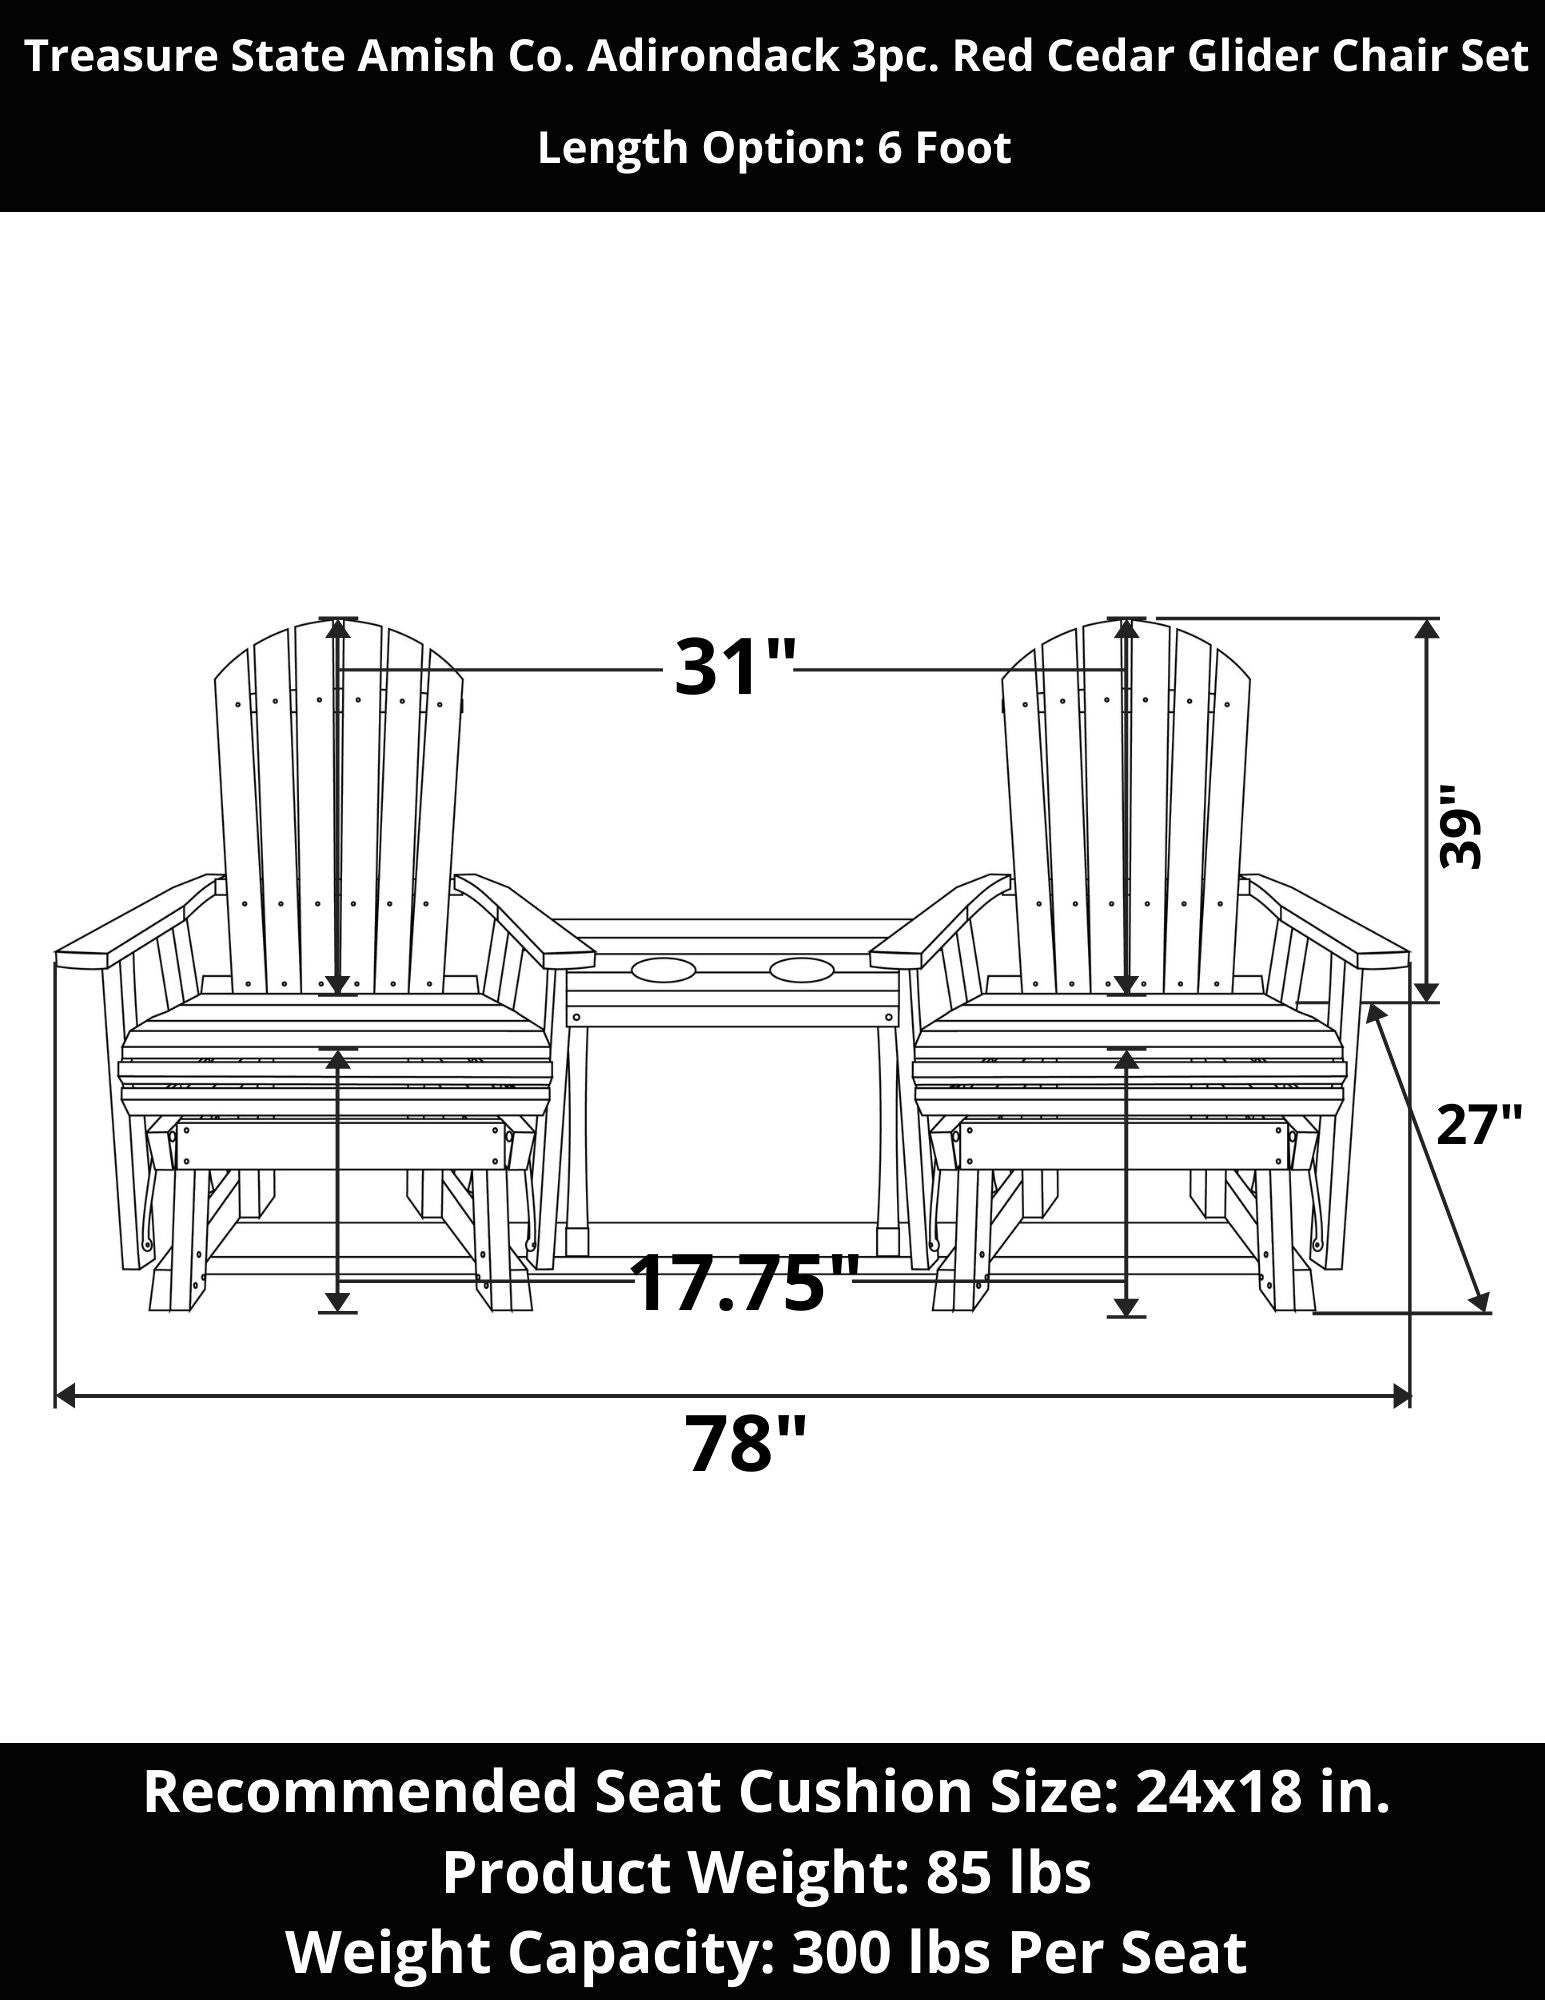 Treasure State Amish Co. Adirondack 3pc. Red Cedar Glider Chair Set